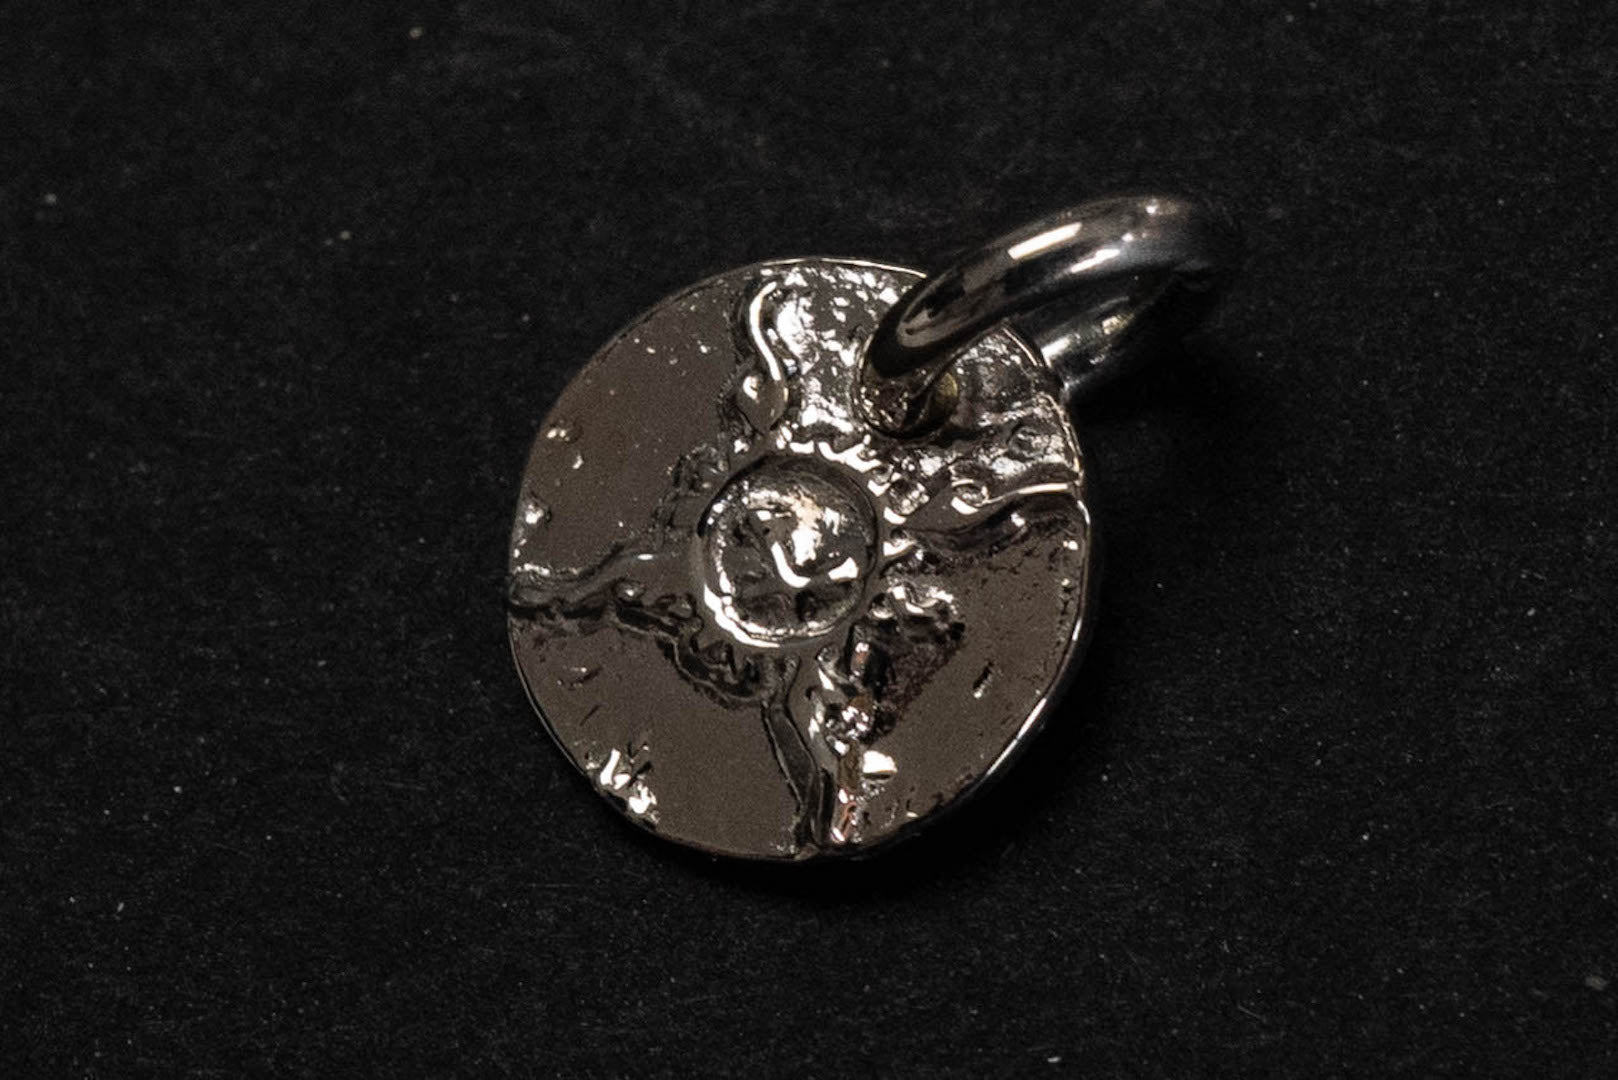 First Arrow's Silver "Sunburst" Medal Mini Pendant (P-228)